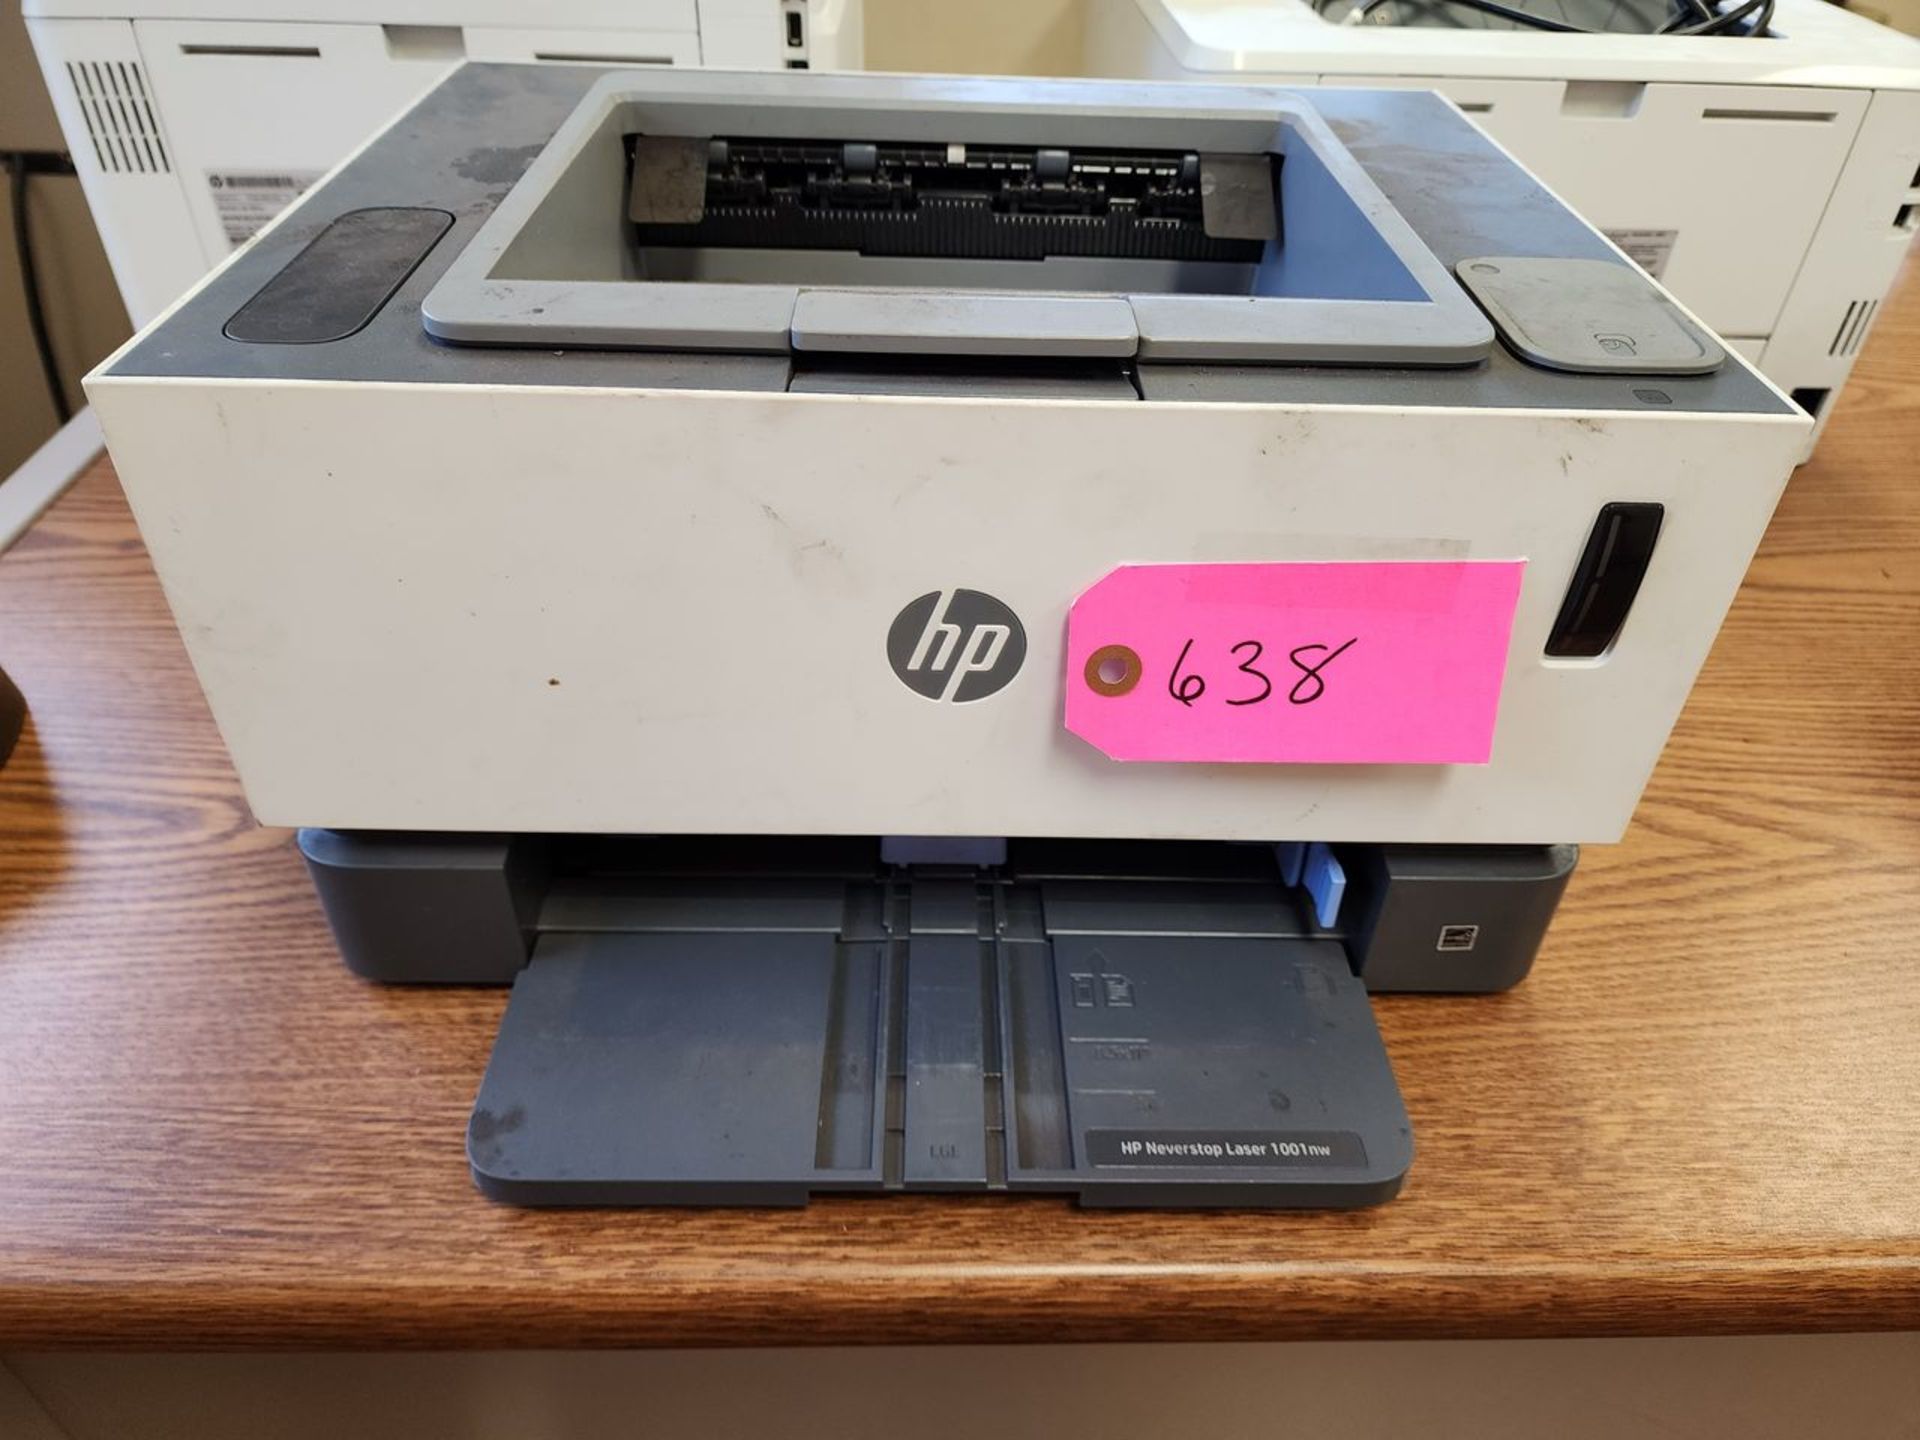 HP Model Neverstop Laser 1001NW, Black and White Laser Printer